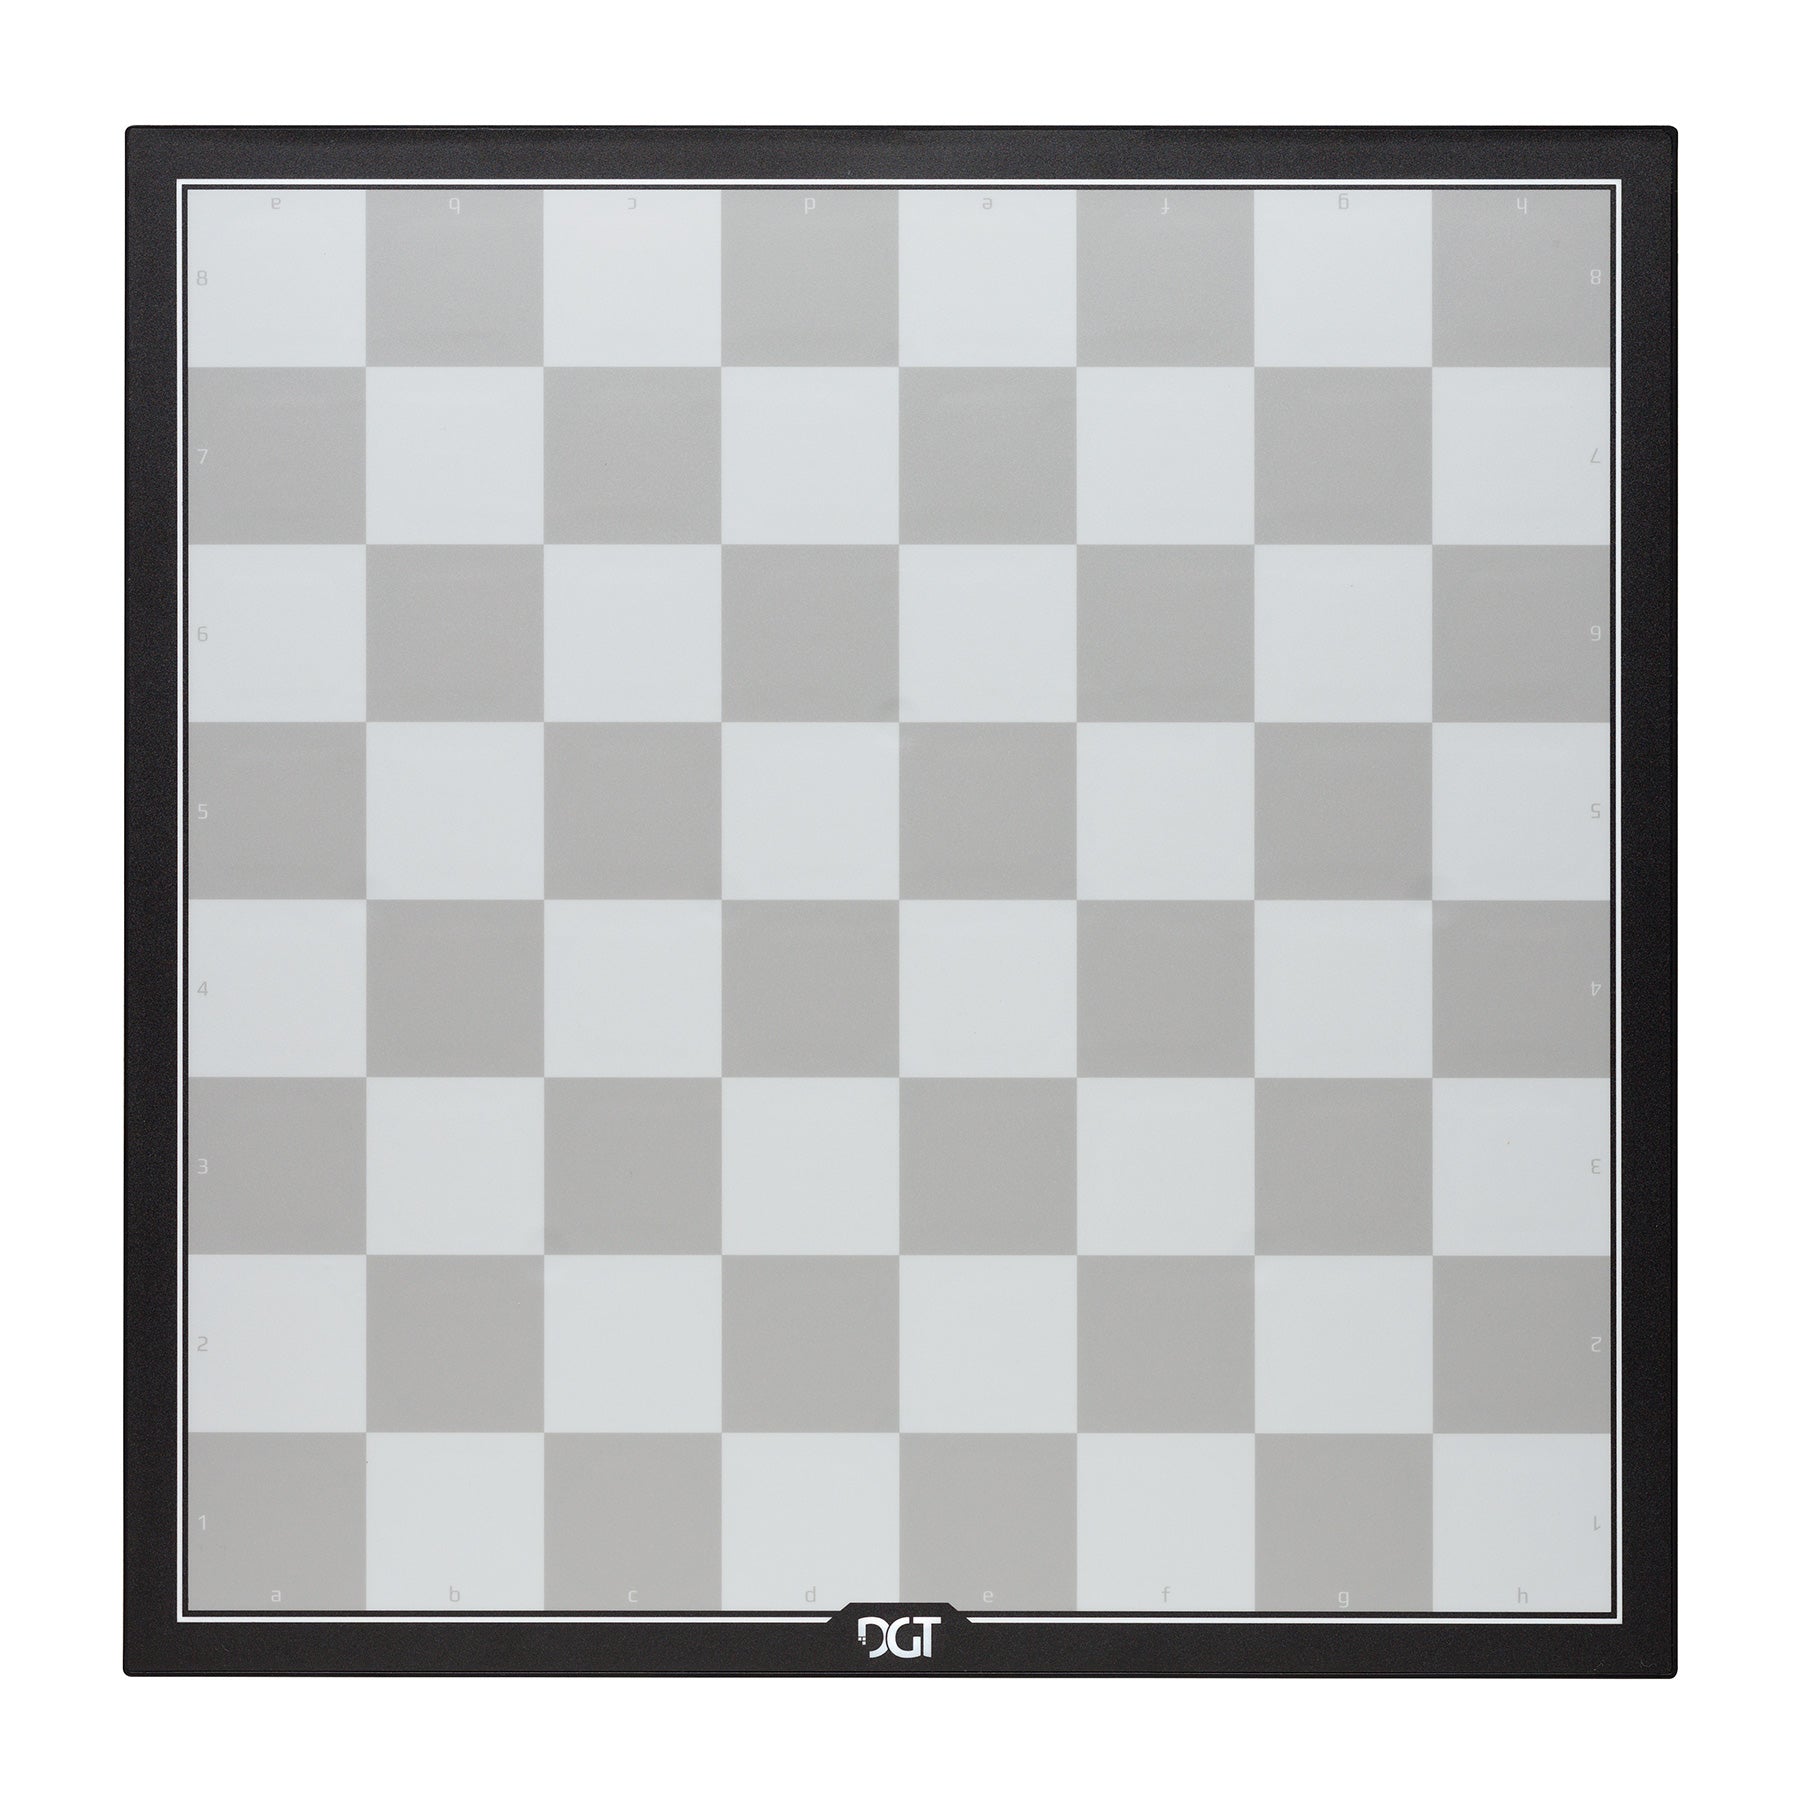 DGT Pegasus Chess Computer - Chess Computer - Chess-House